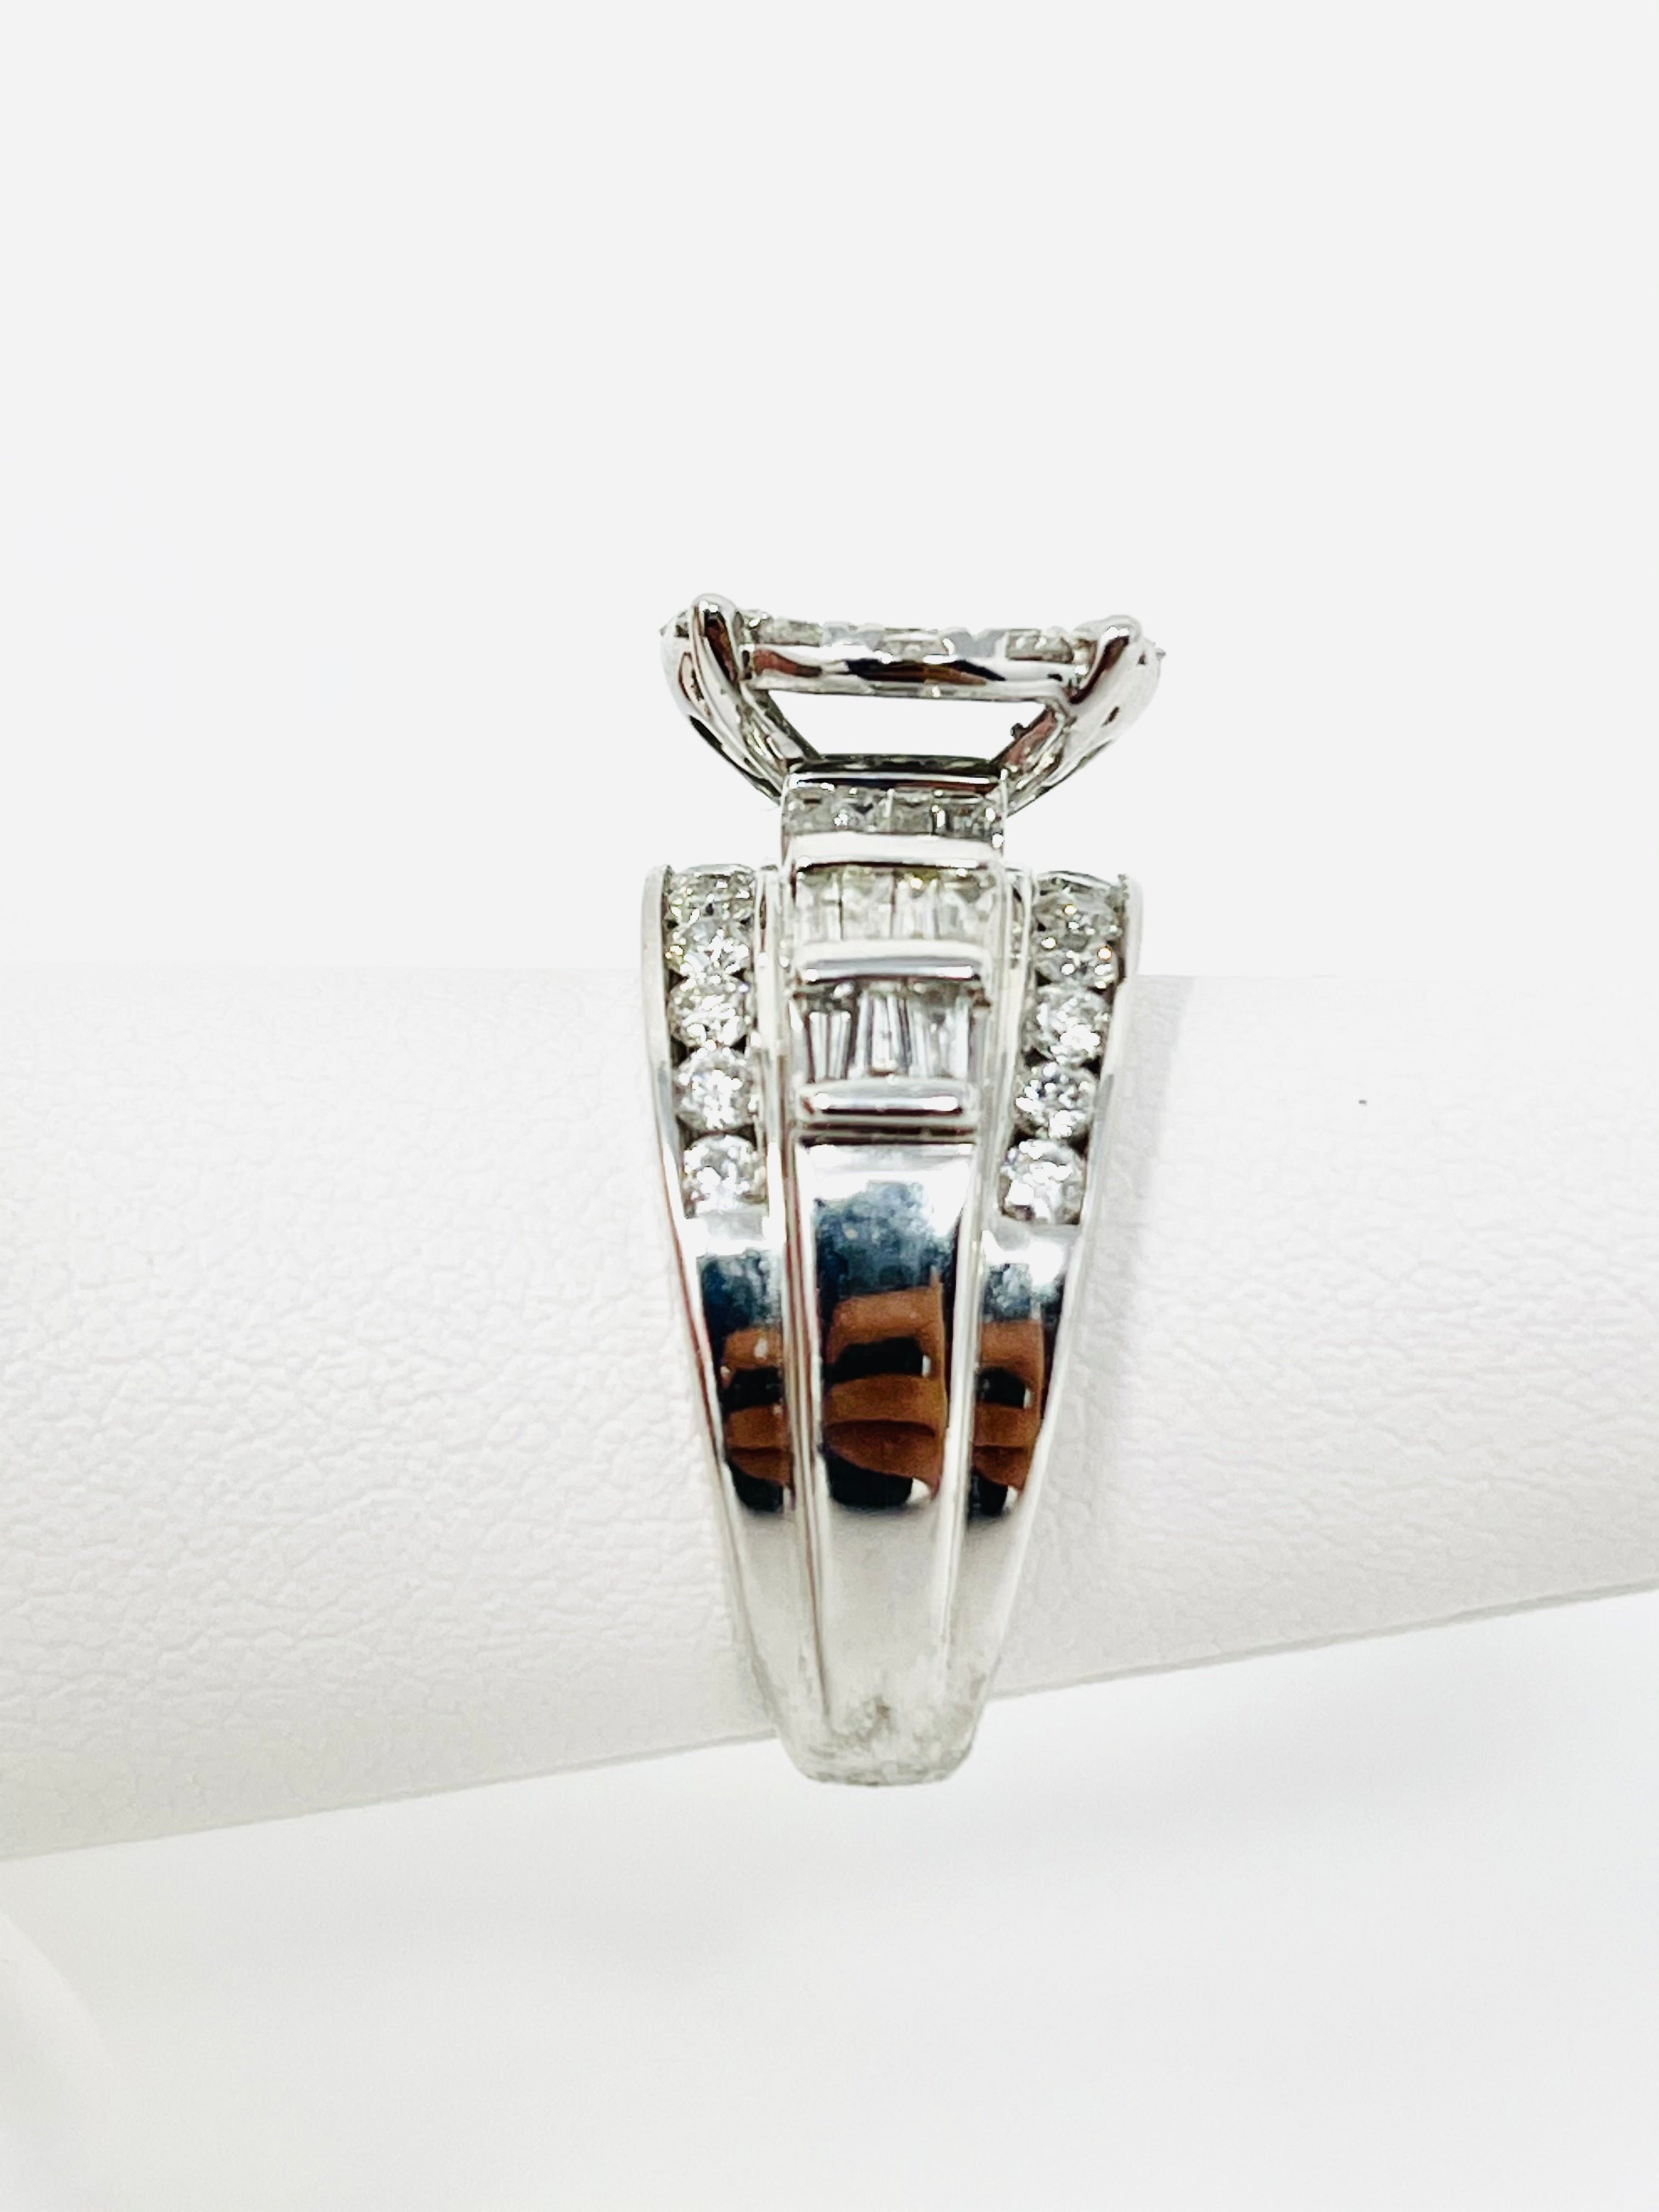 10K White Gold Round Diamond Cluster Bridal Wedding Engagement Ring 1.5Ct